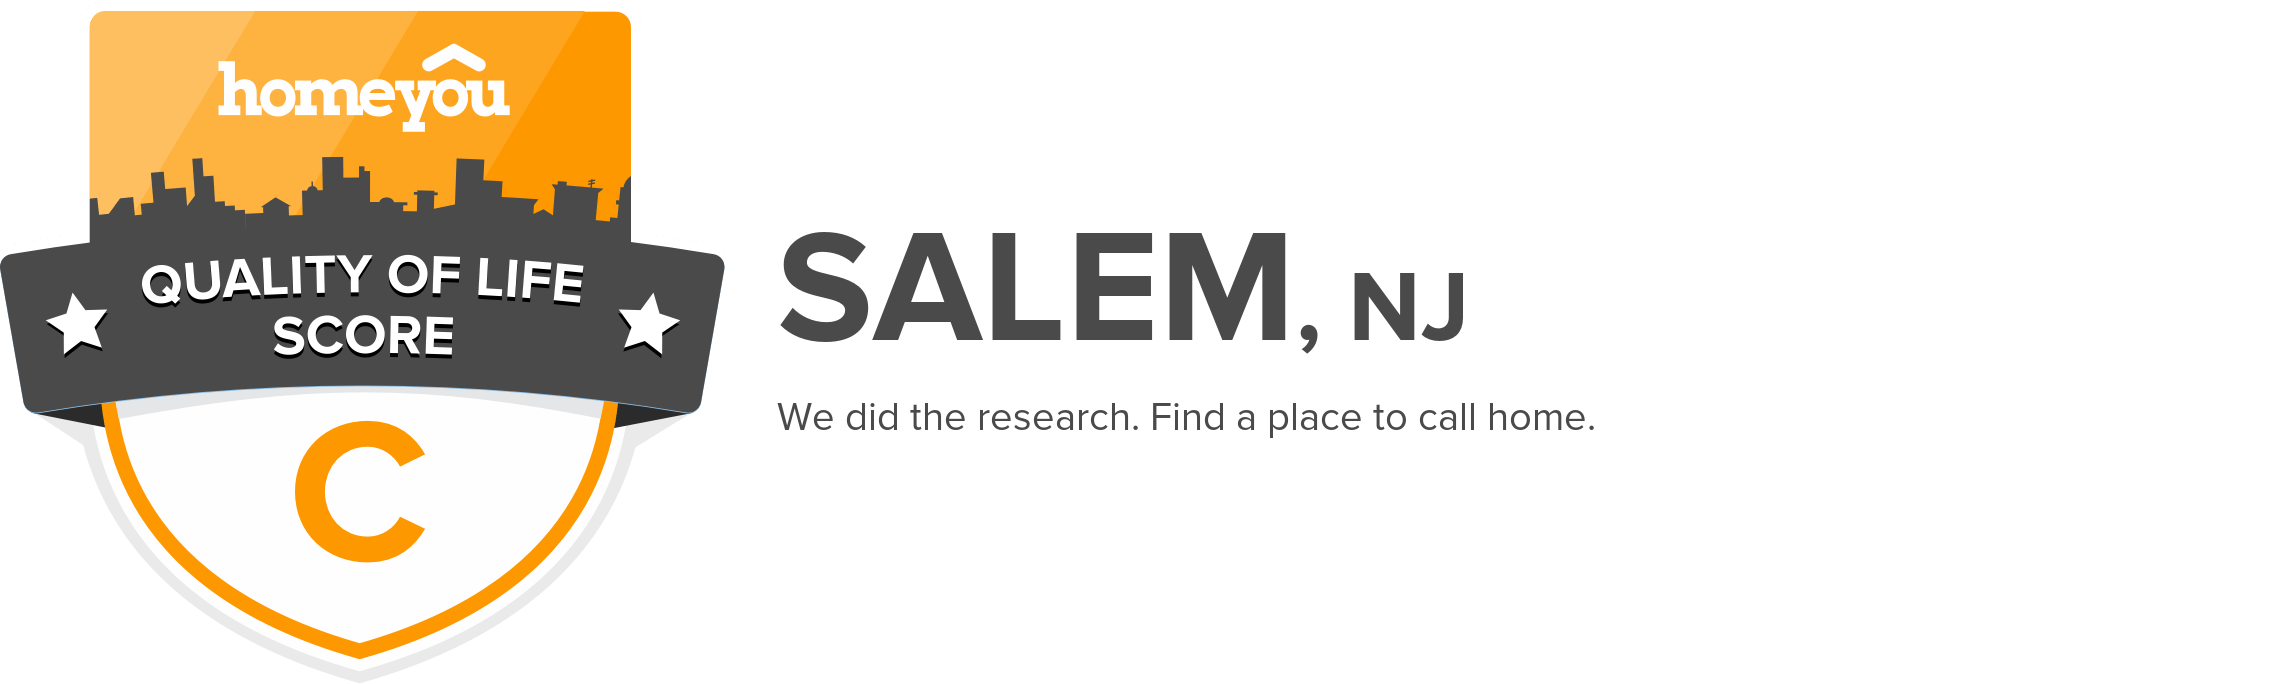 Salem, NJ